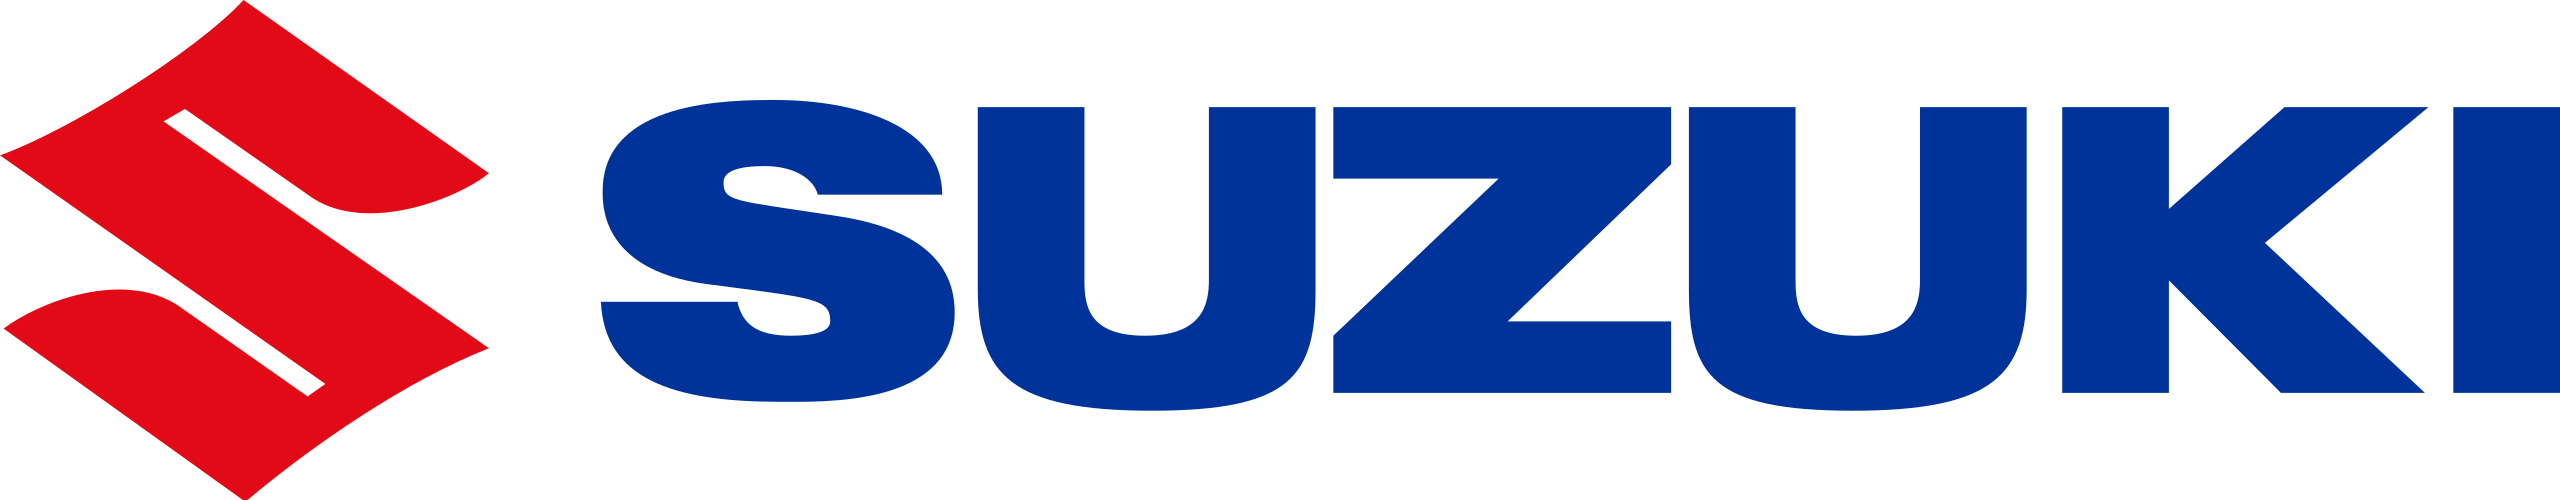 Suzuki_Motor_Corporation_logo